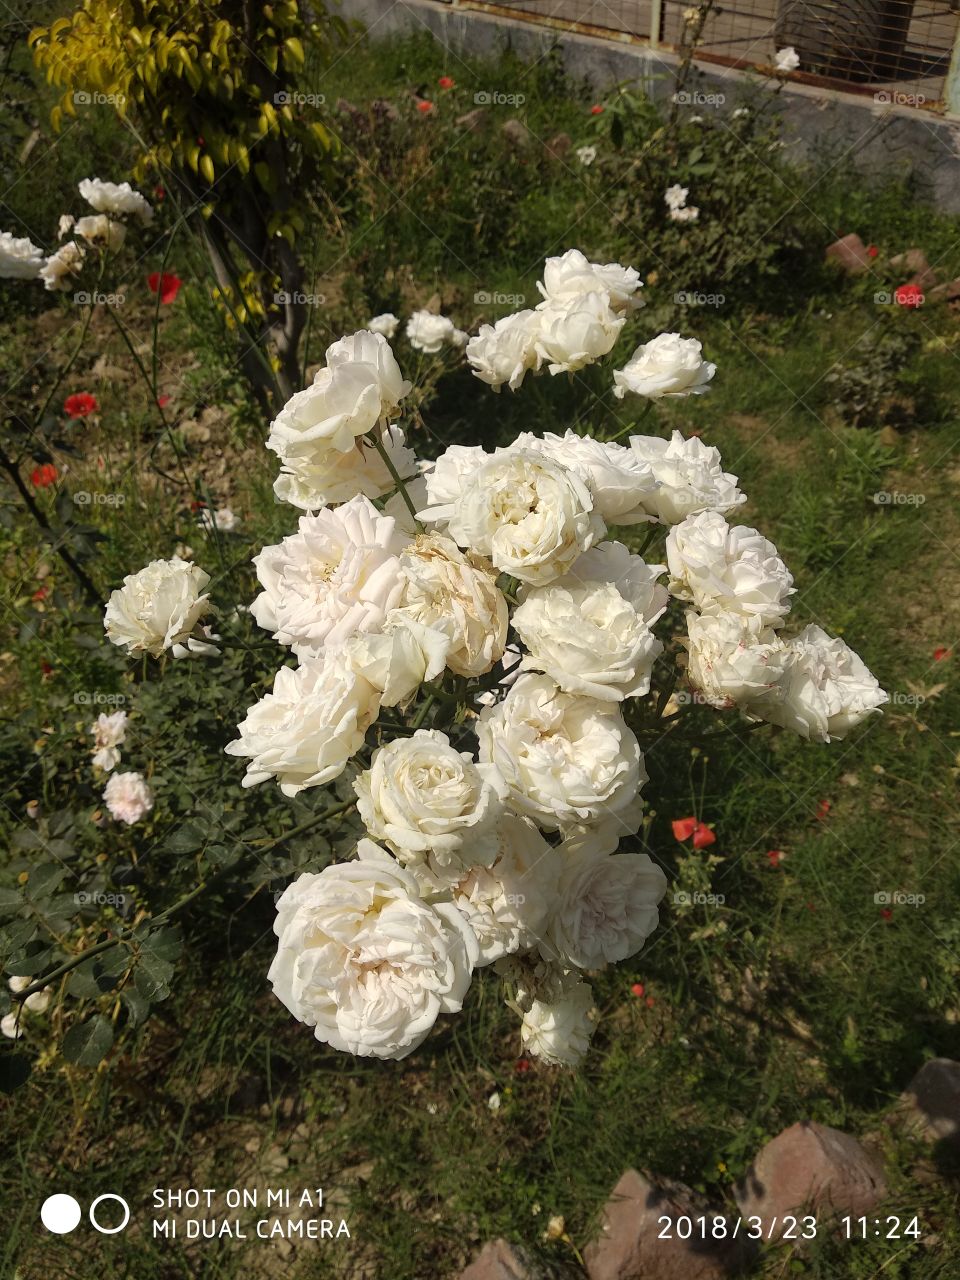 30 roses on one stem